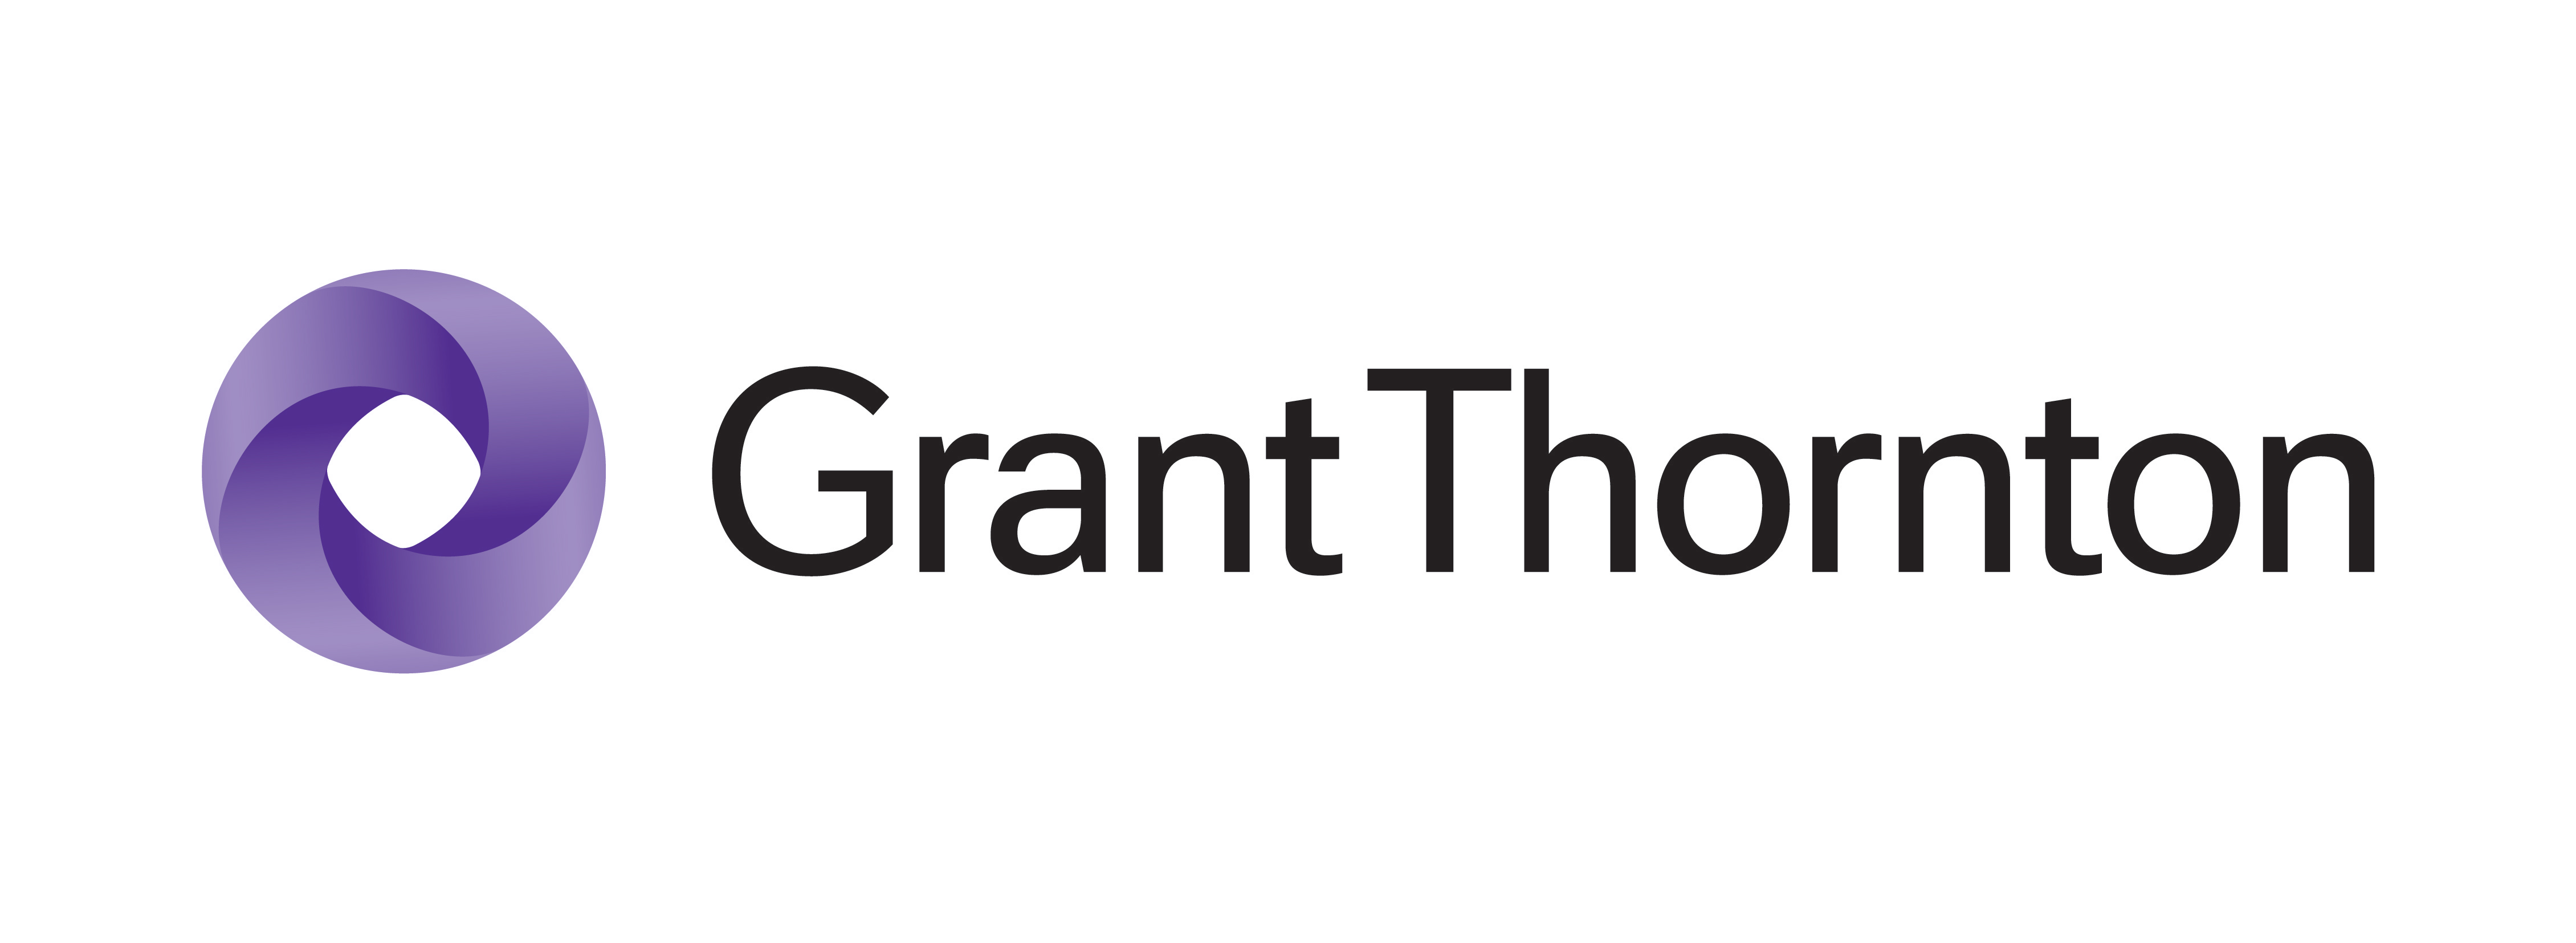 Grant Thornton logo 1